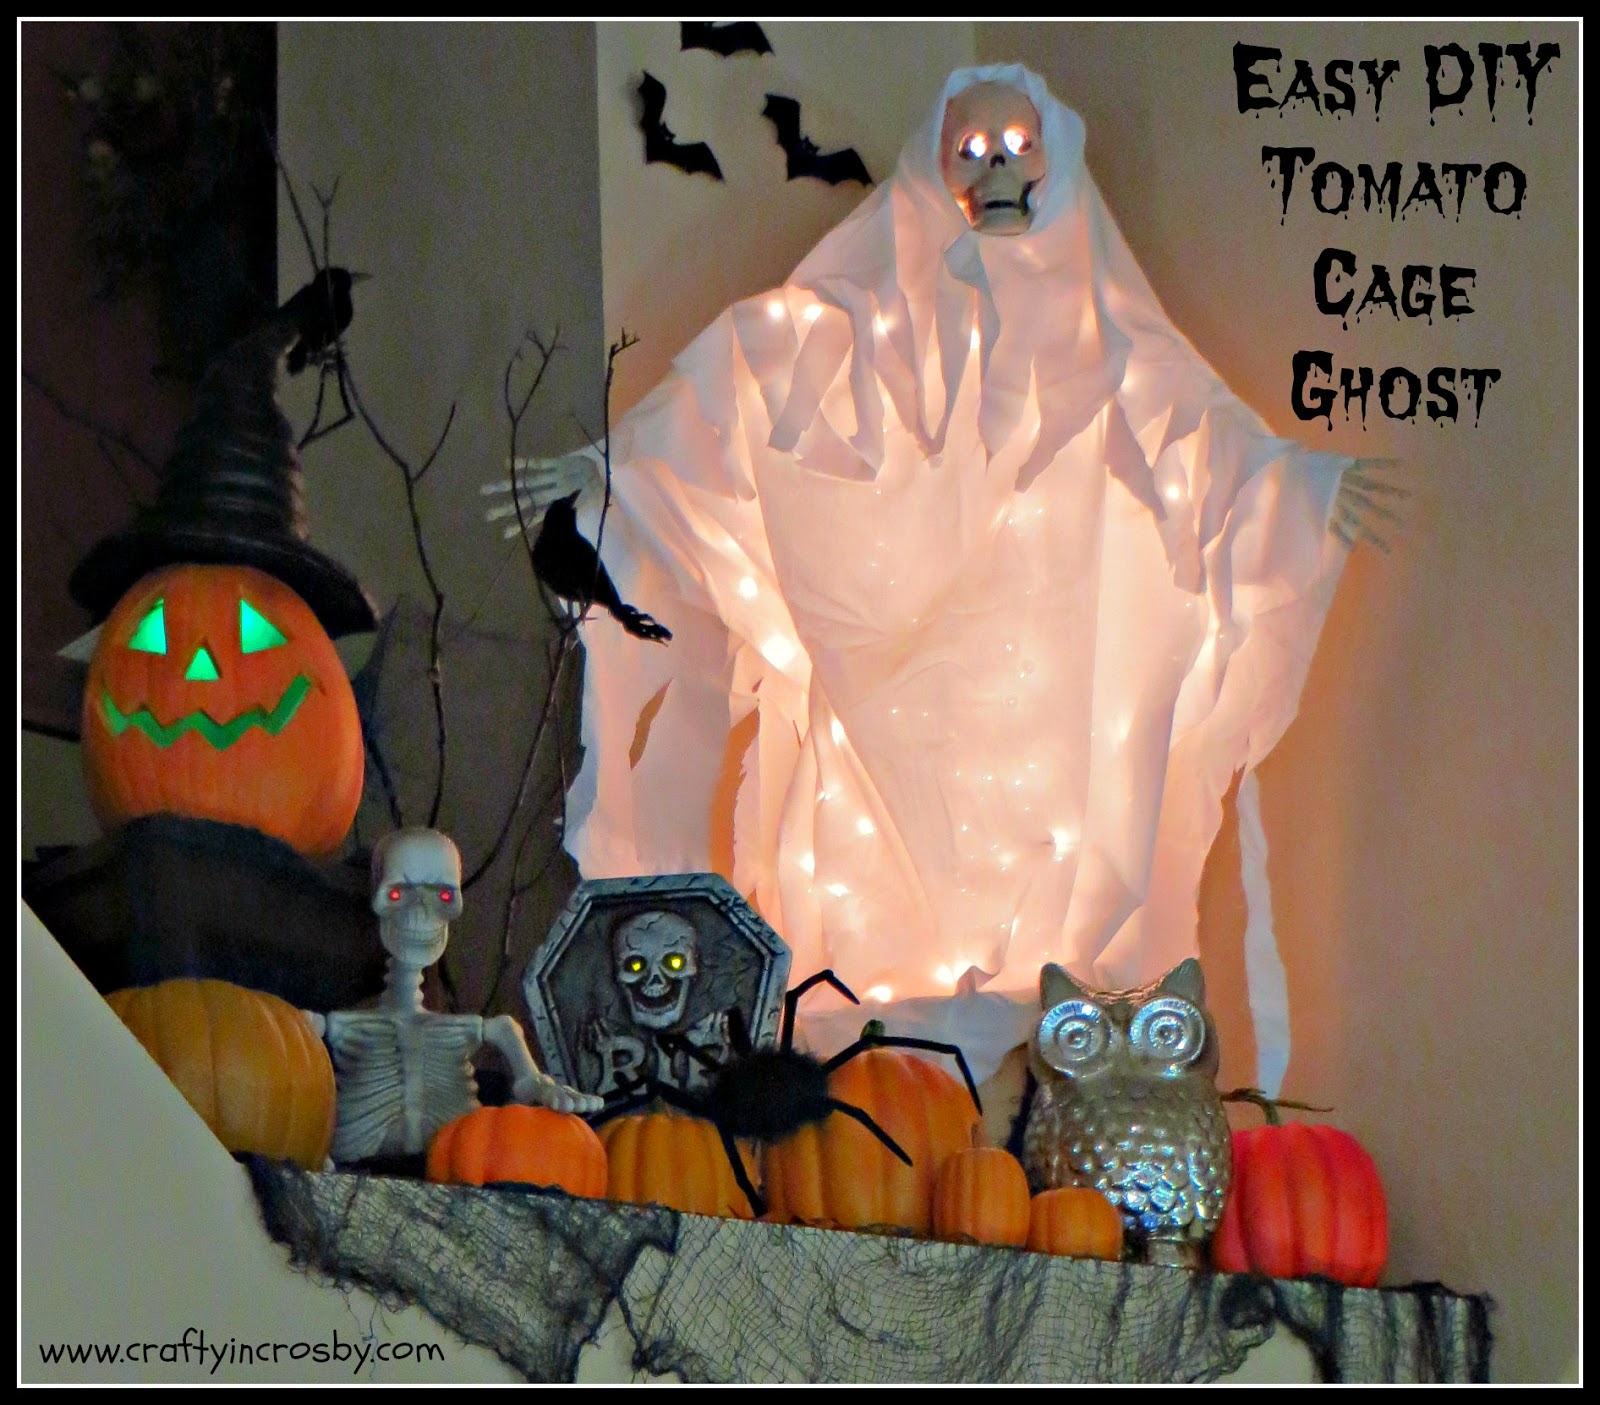 Spooky Halloween Decorations, creepy Halloween, Halloween DIY, tomato cage ghost, Dollar Tree